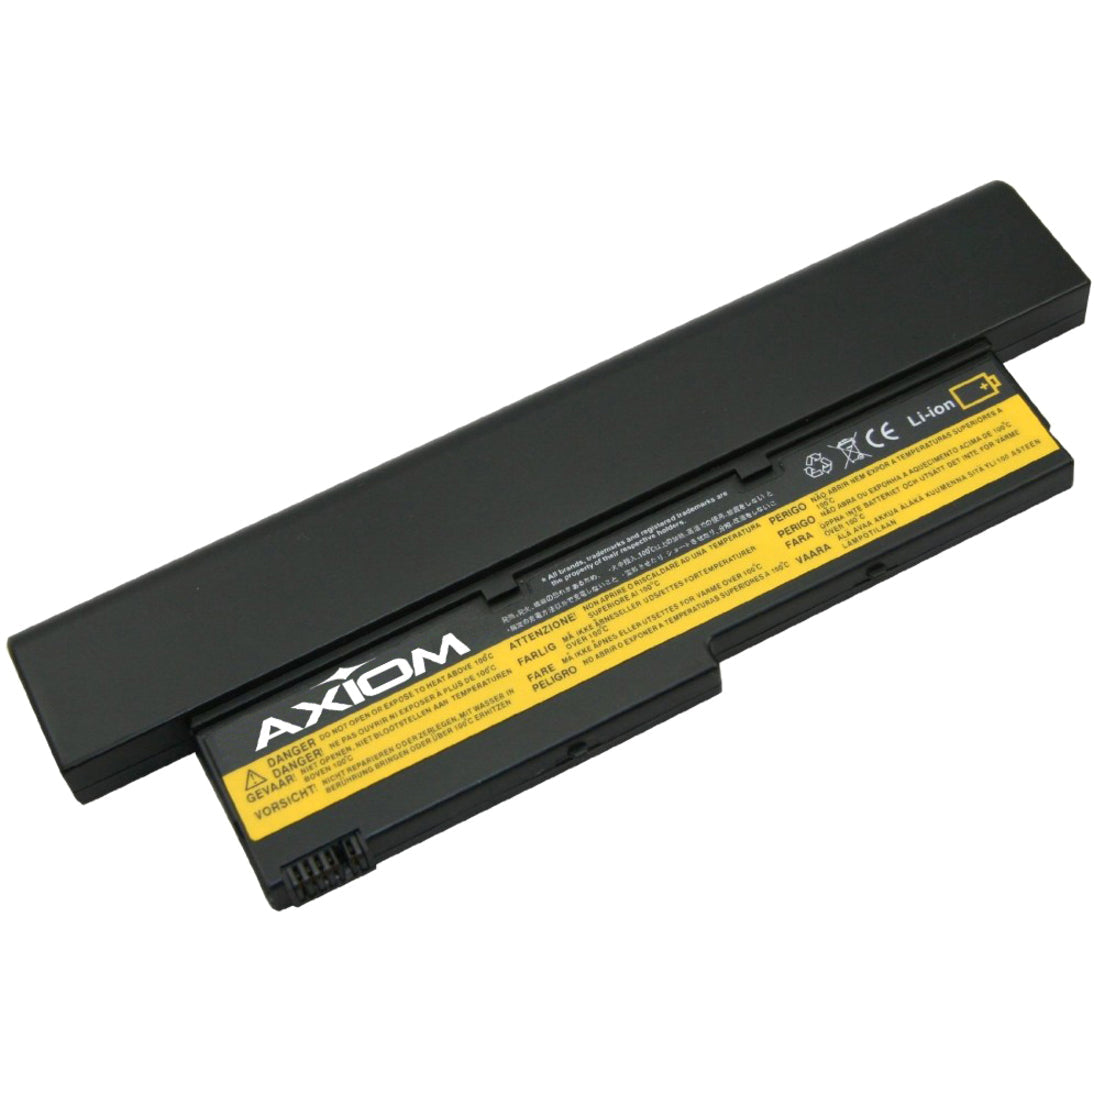 Axiom LI-ION 8-Cell Battery for Lenovo - 92P1005 92P1002 92P0999 92P1119